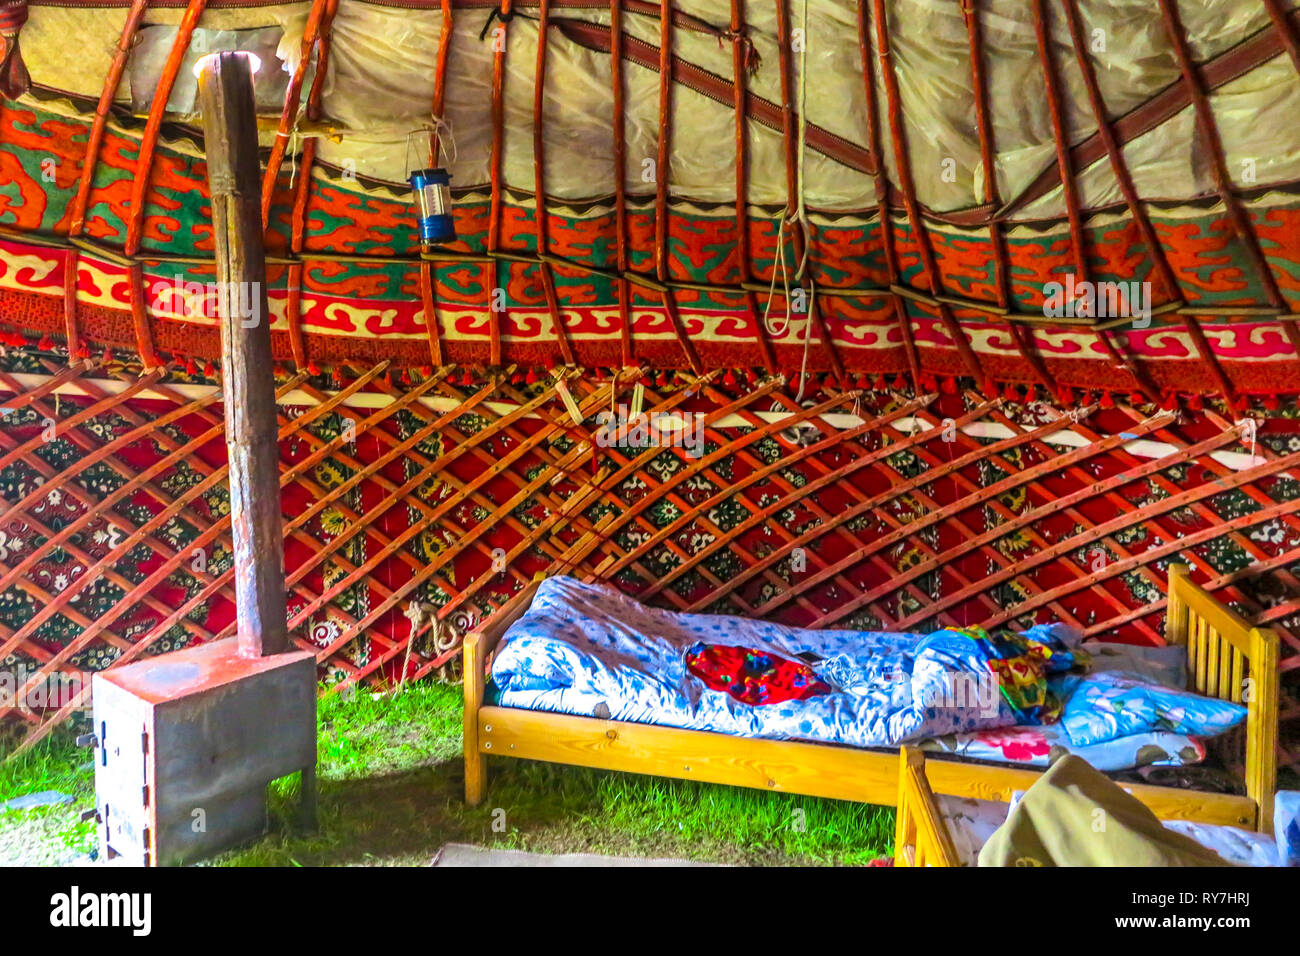 Tash Rabat Caravanserai Traditional Kyrgyz Yurt Interior with Stove and Sleeping Bed Stock Photo